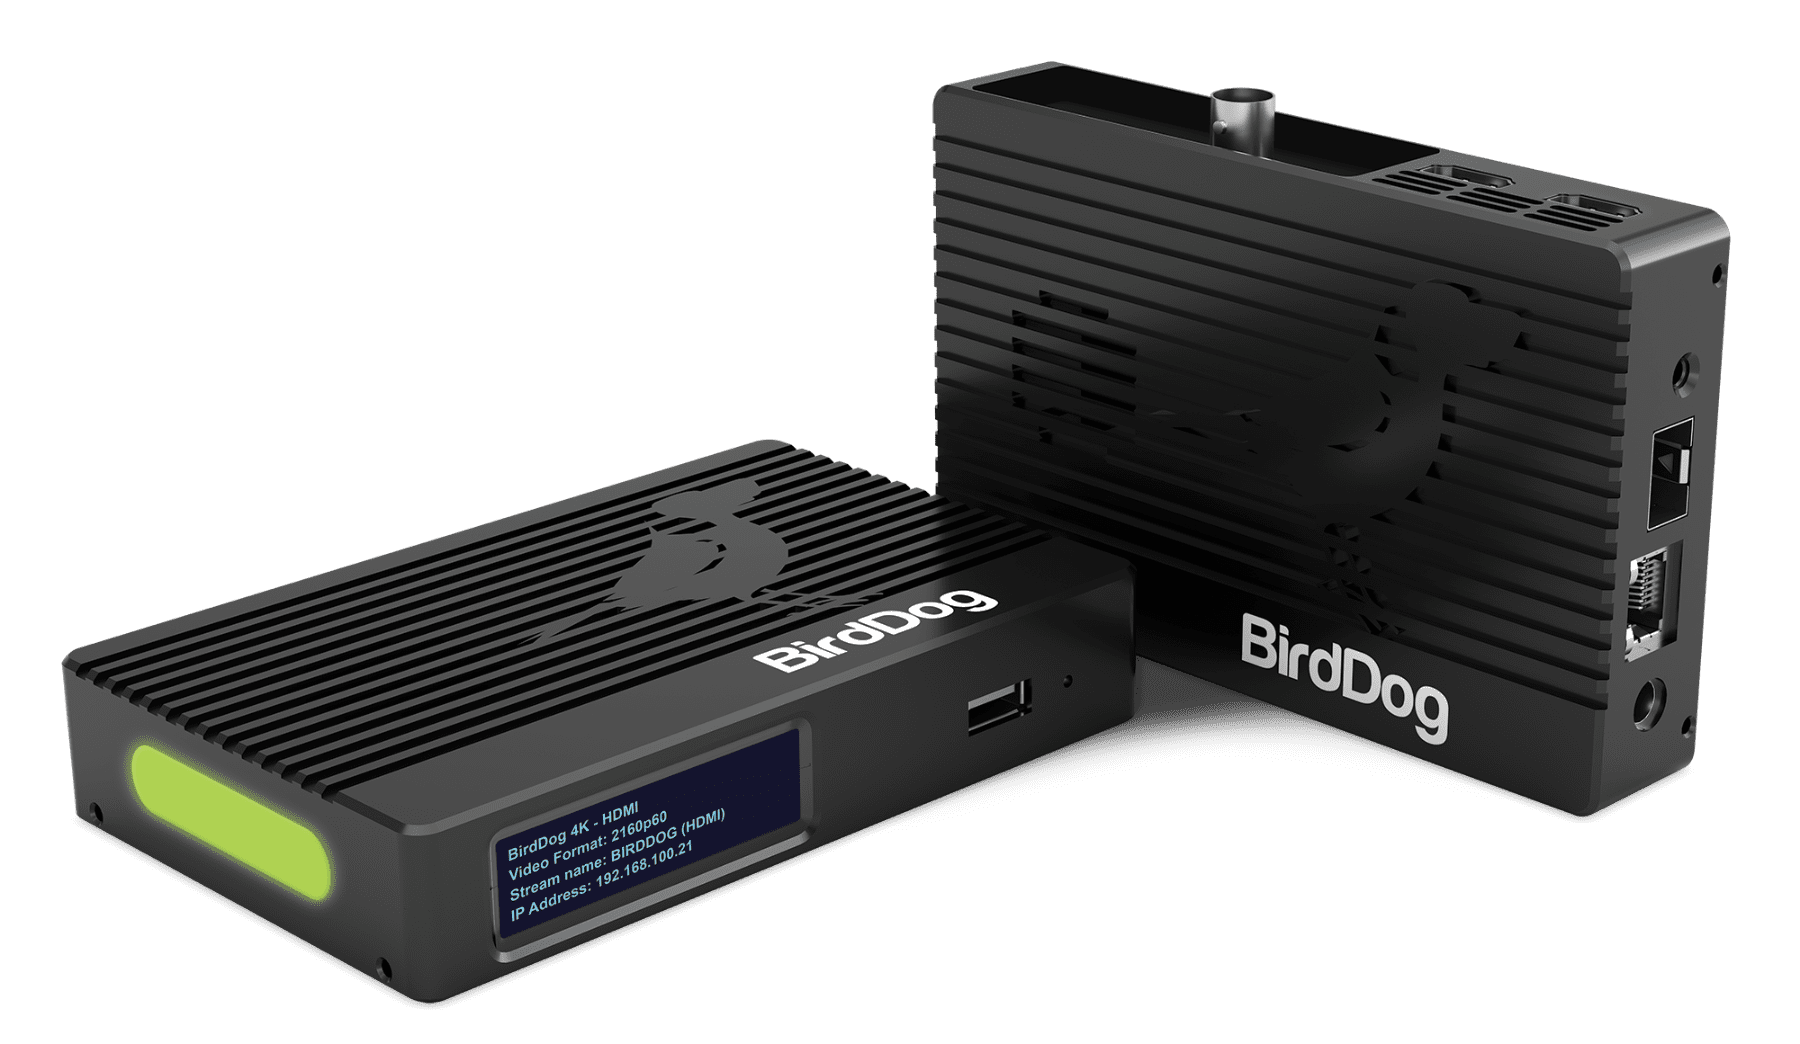 BirdDog 4K HDMI NDI Encoder/Decoder